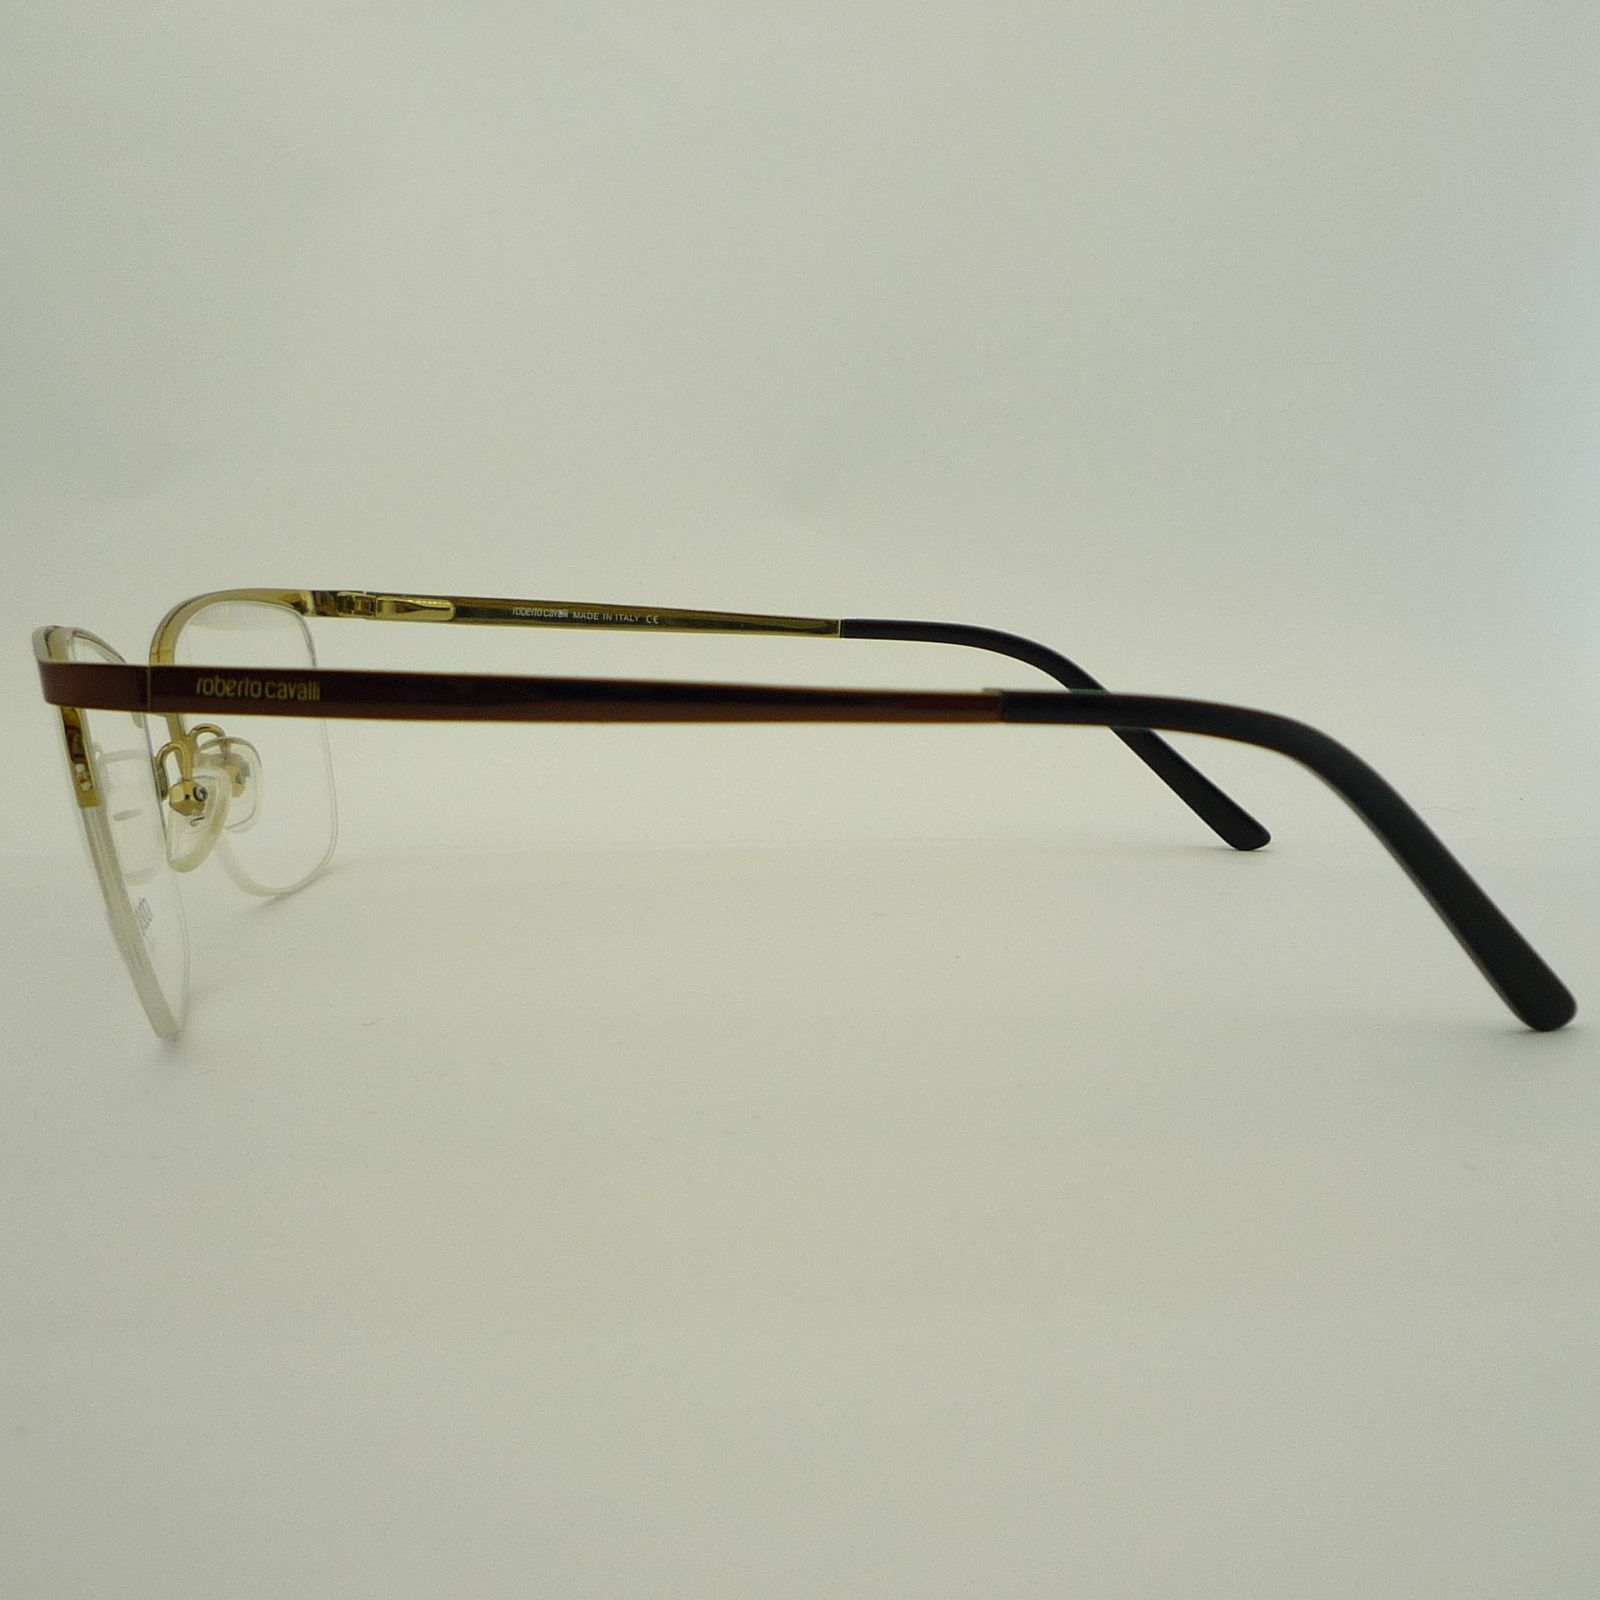 فریم عینک طبی زنانه روبرتو کاوالی مدل 6581c2 -  - 7